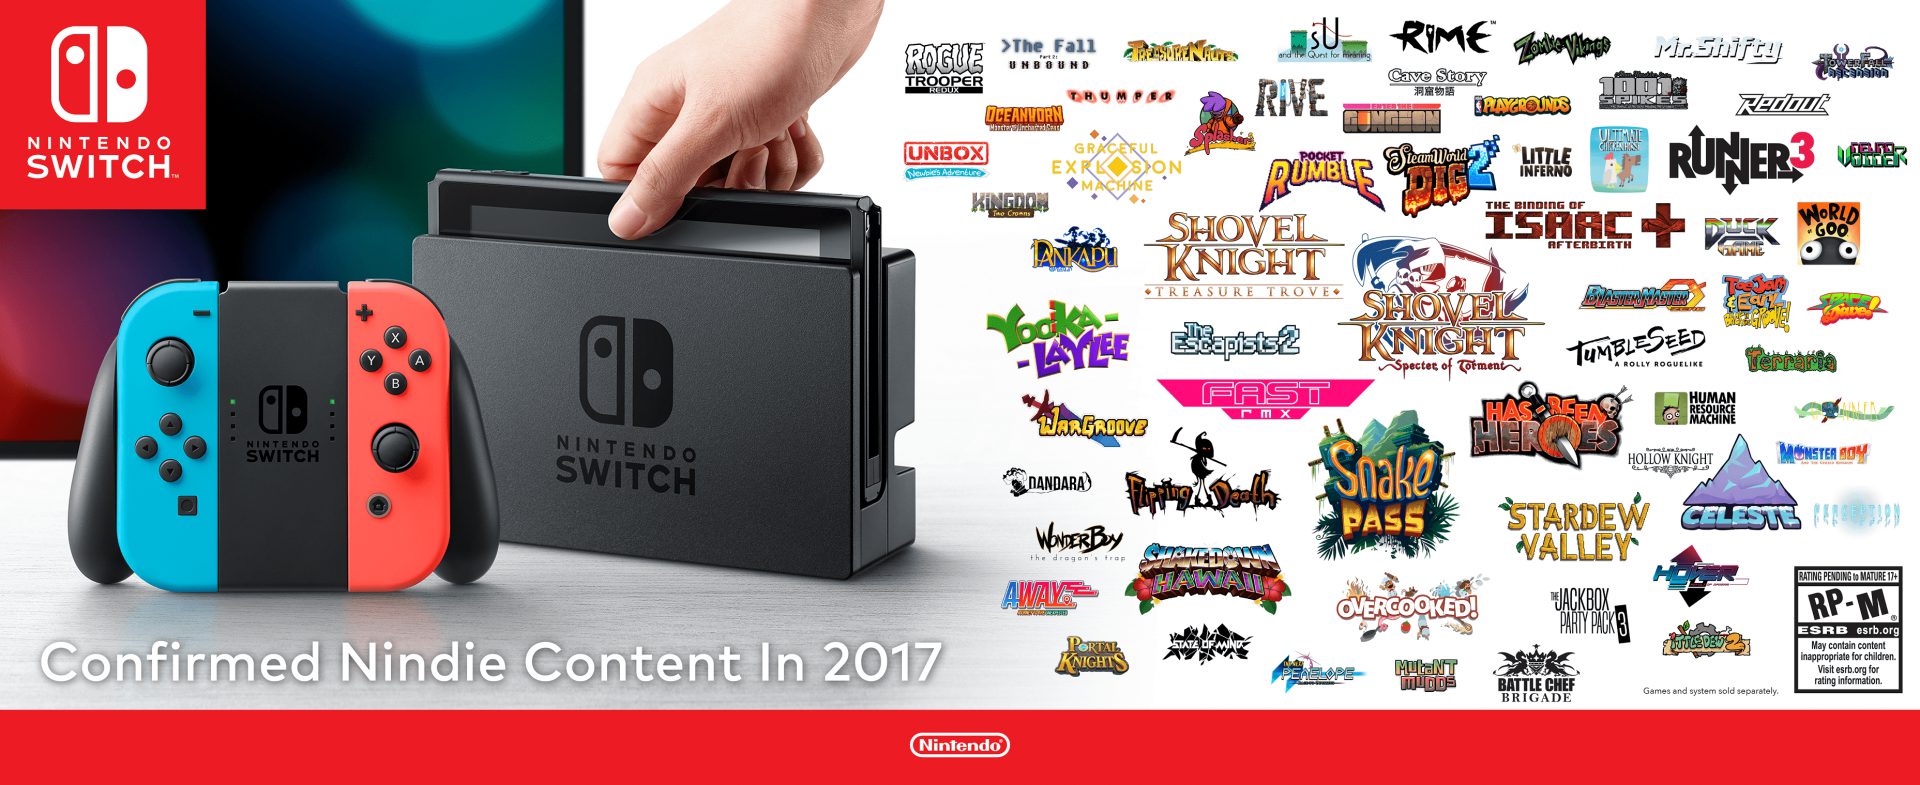 Indies Nintendo Switch